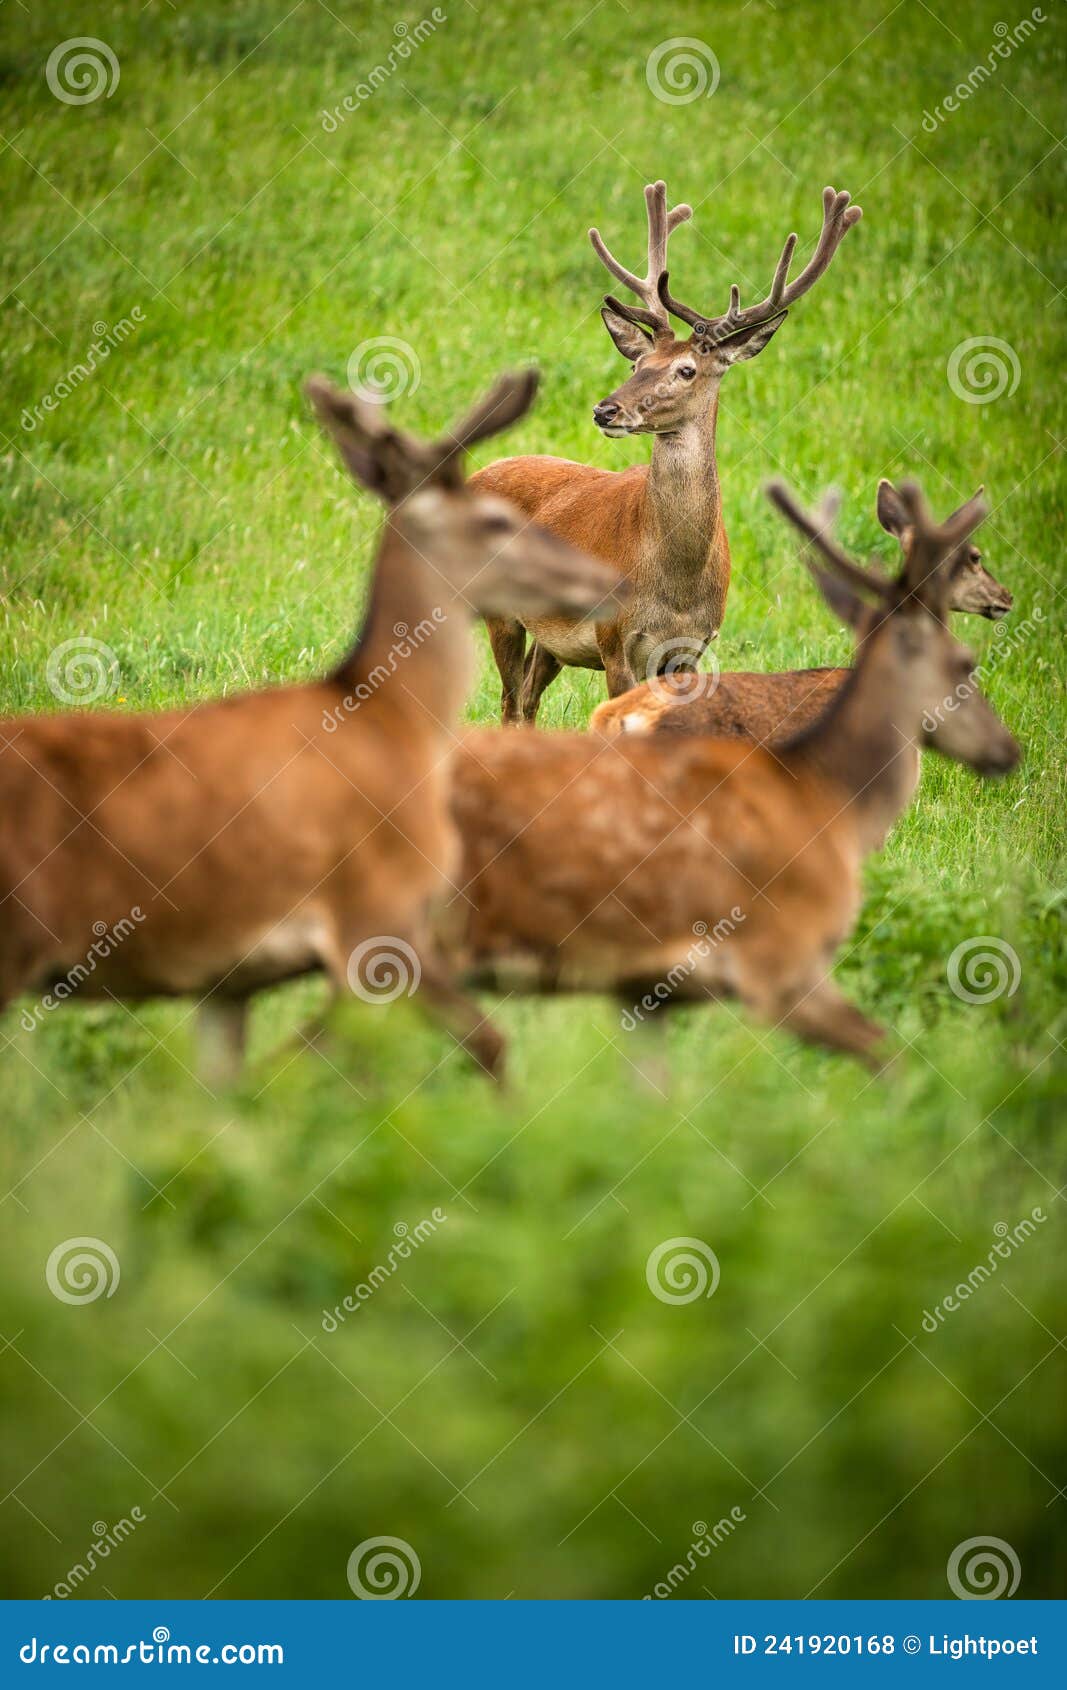 fallow deer wild ruminant mammal on pasture